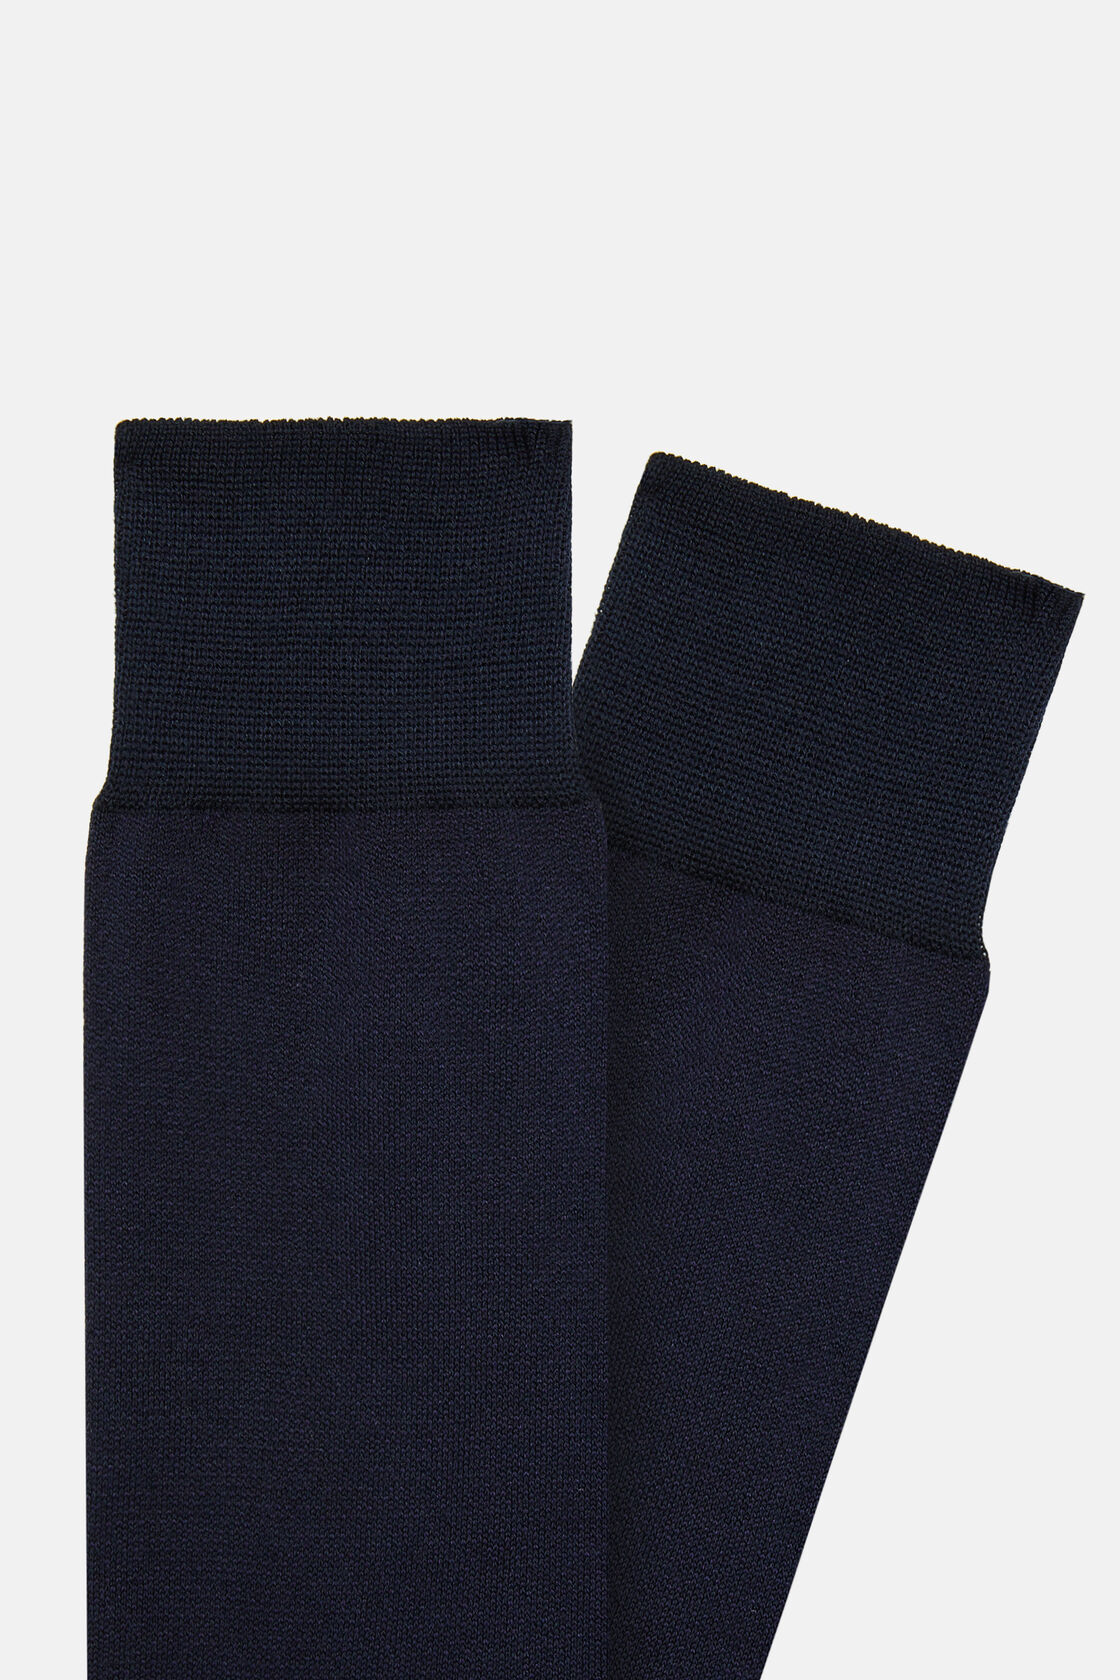 Calcetines Oxford de algodón, Azul  Marino, hi-res